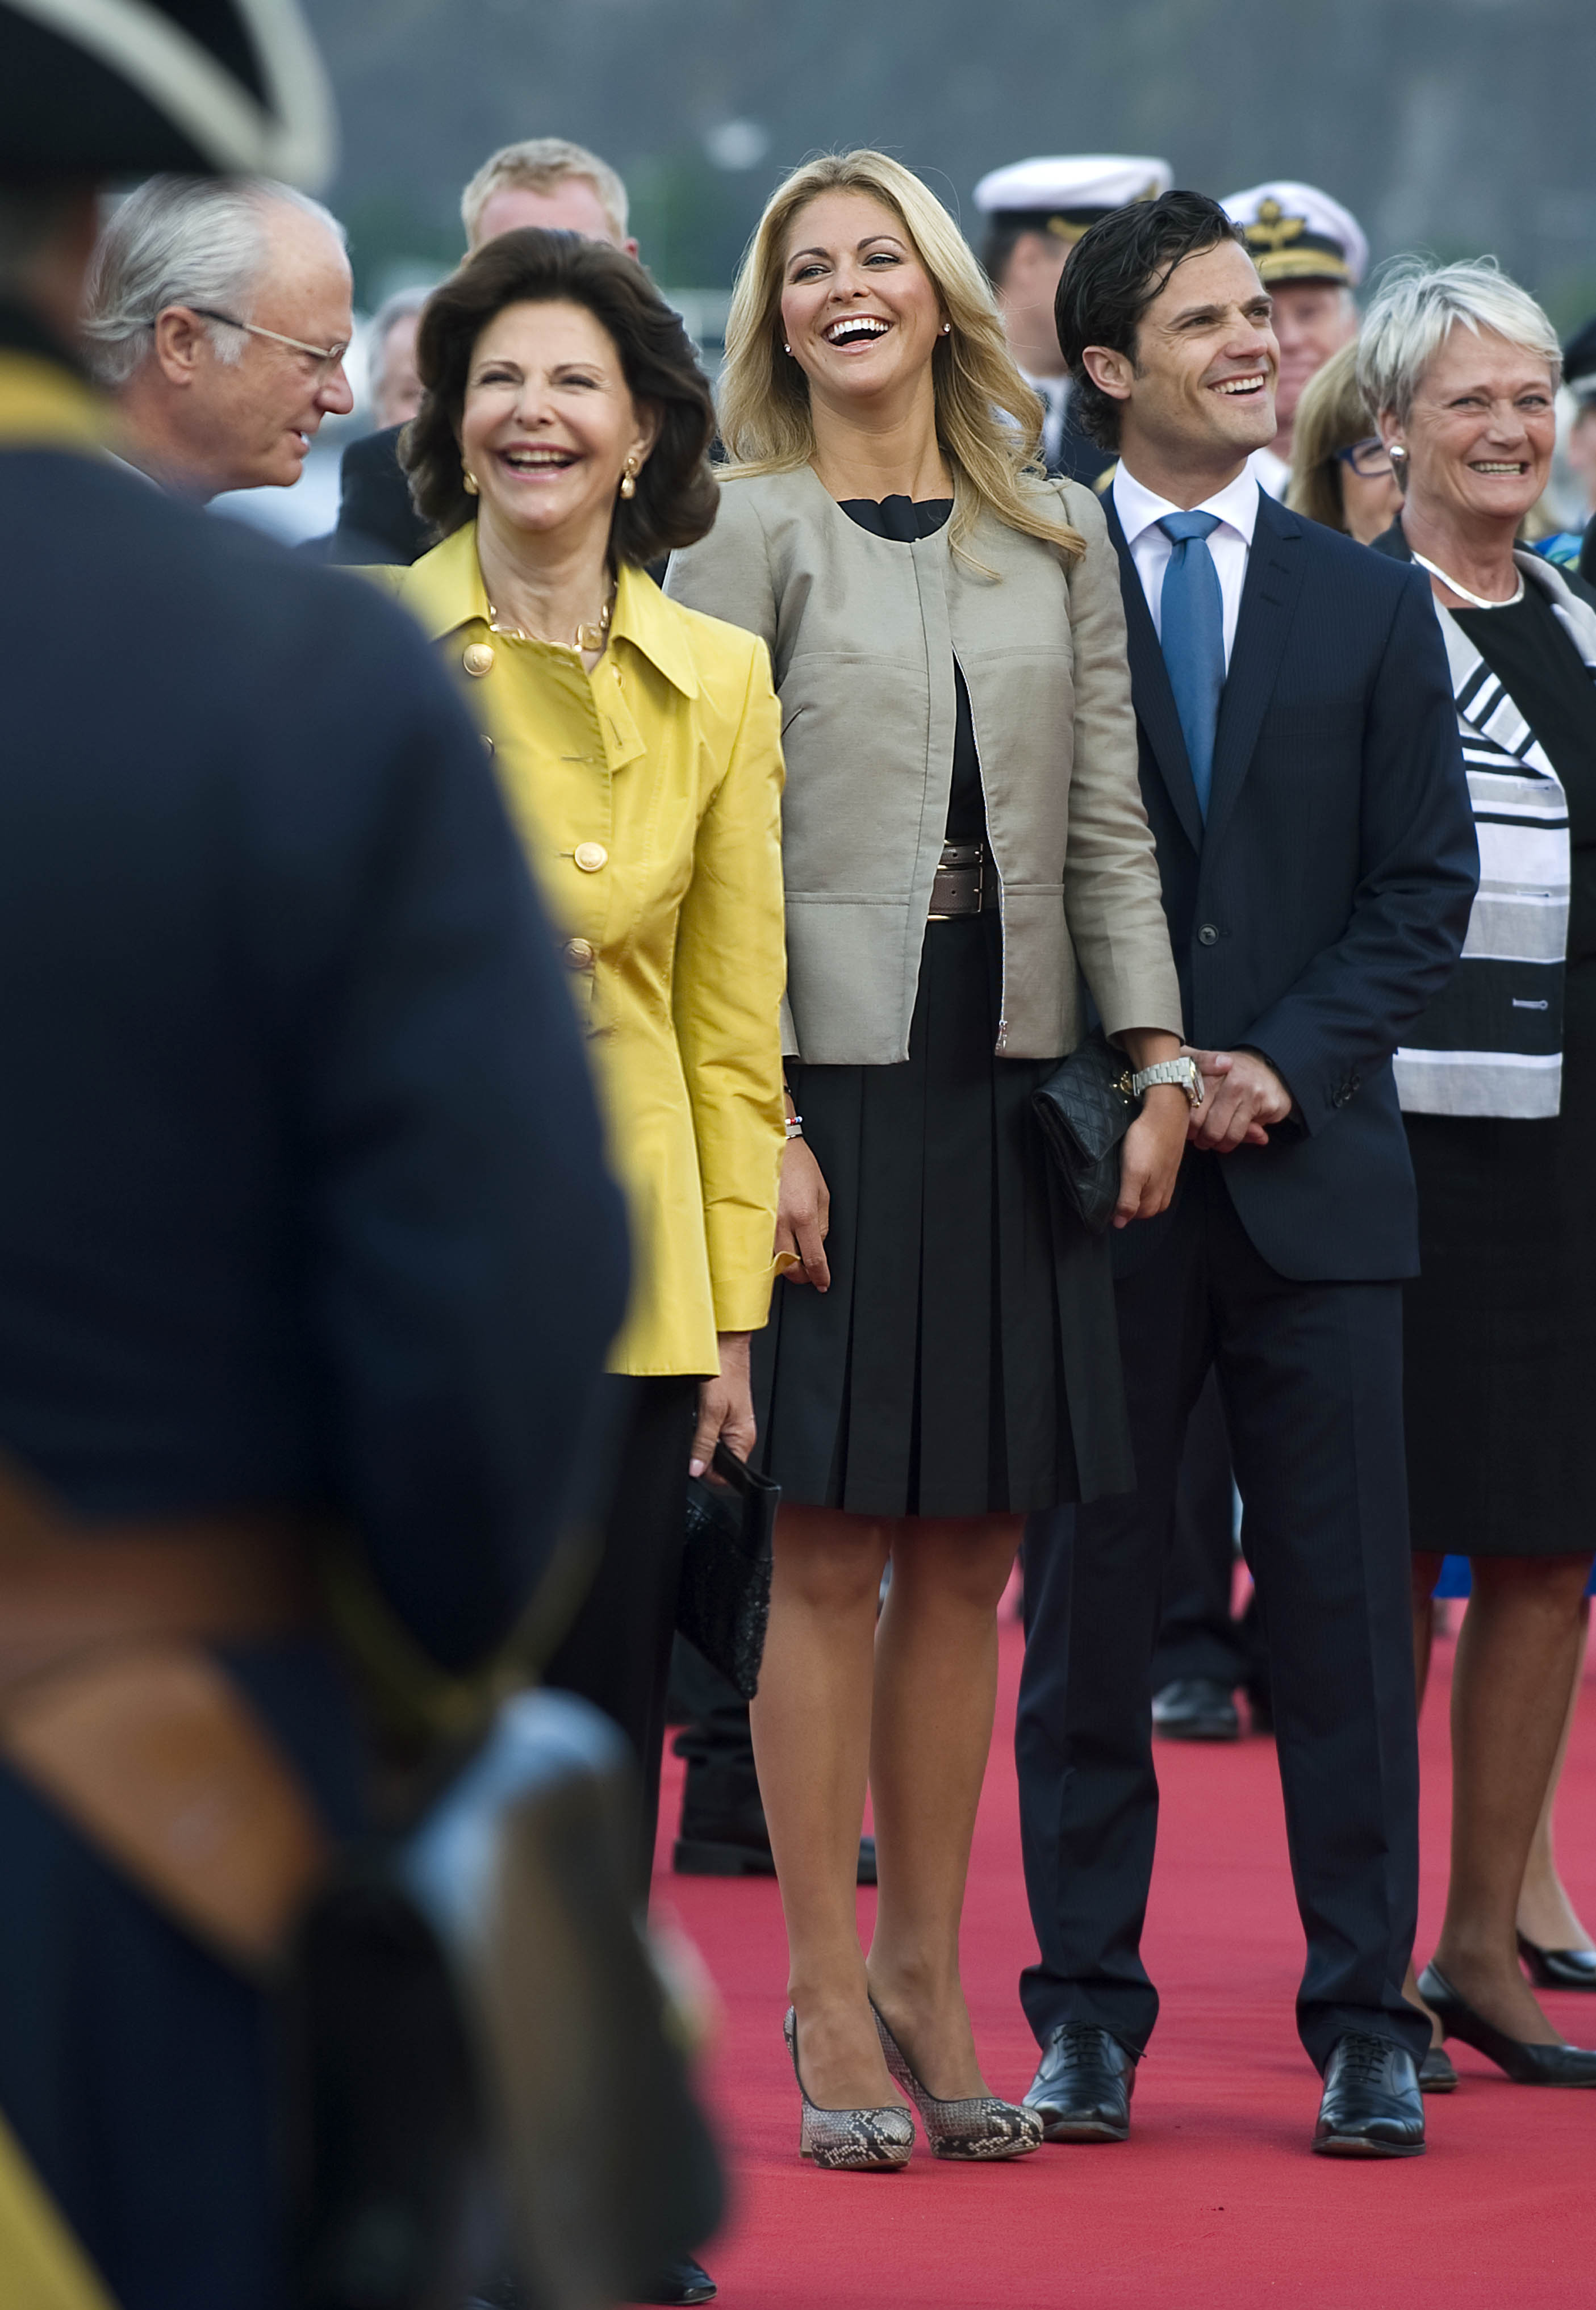 Prins Daniel, Prinsessan Madeleine, Hovet, Jonas Bergström, Bröllop, Kungligt, Kung Carl XVI Gustaf, kronprinsessan Victoria, Kungliga bröllop